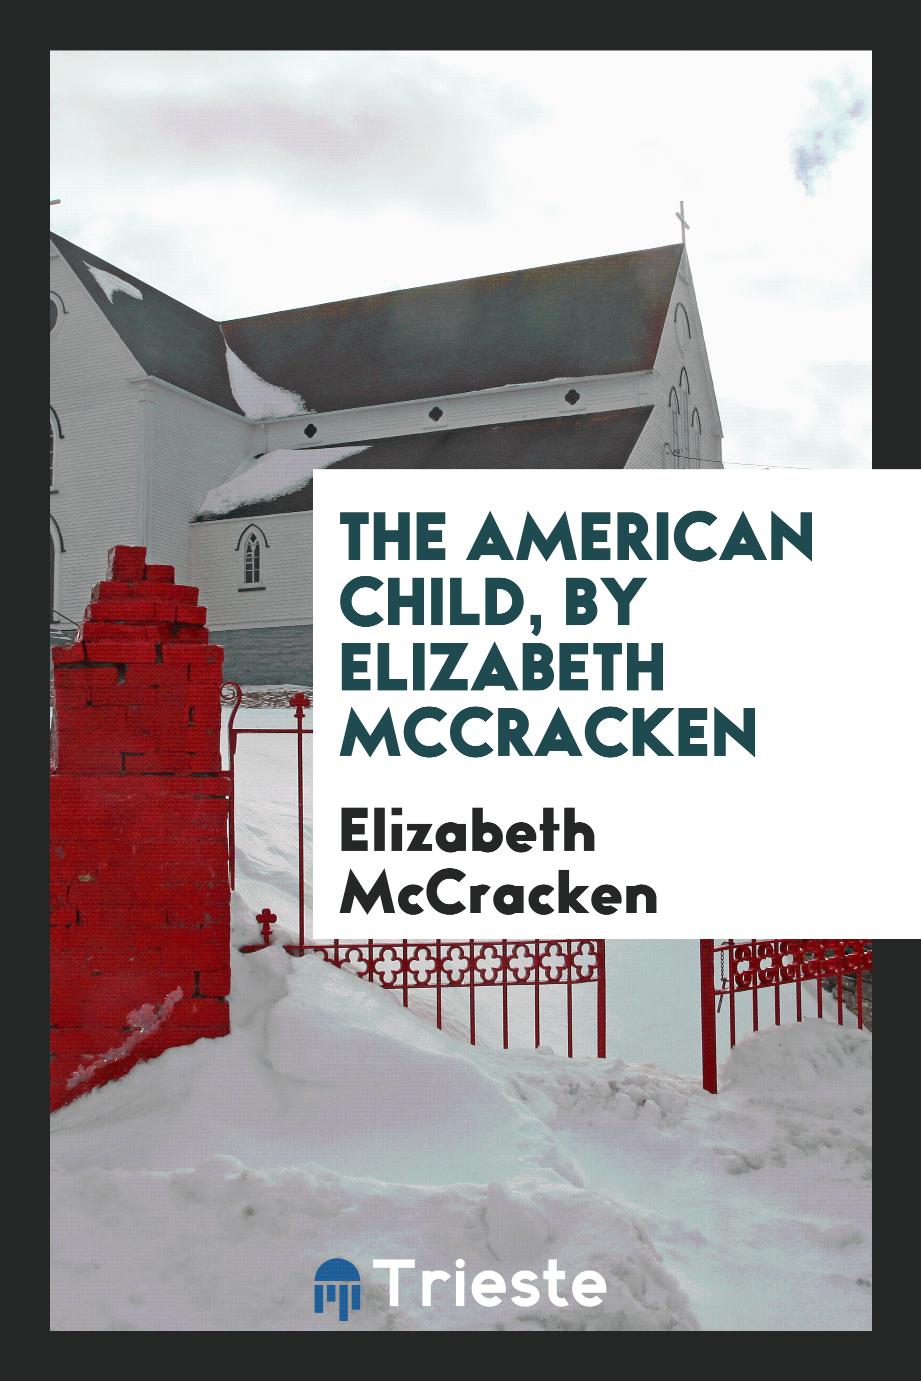 The American child, by Elizabeth McCracken